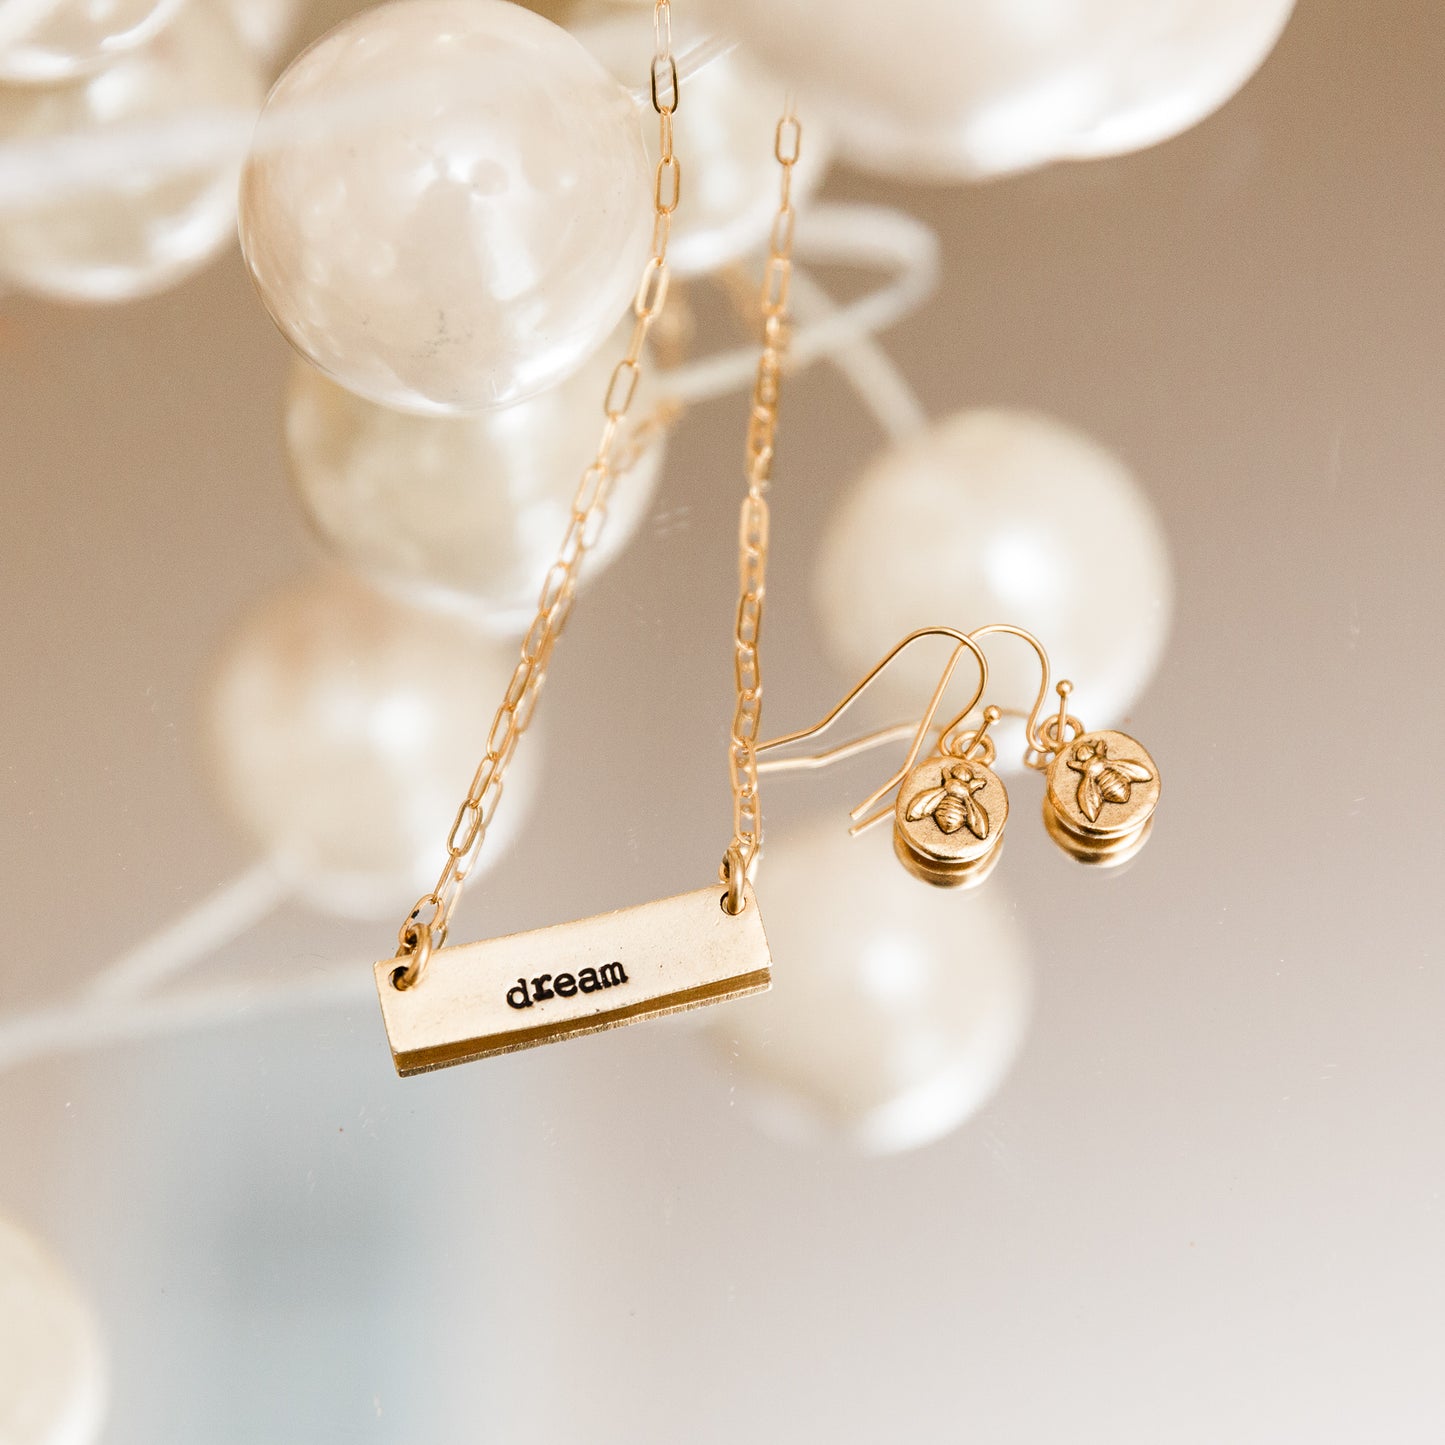 April “God Dreams“ Necklace & Earrings